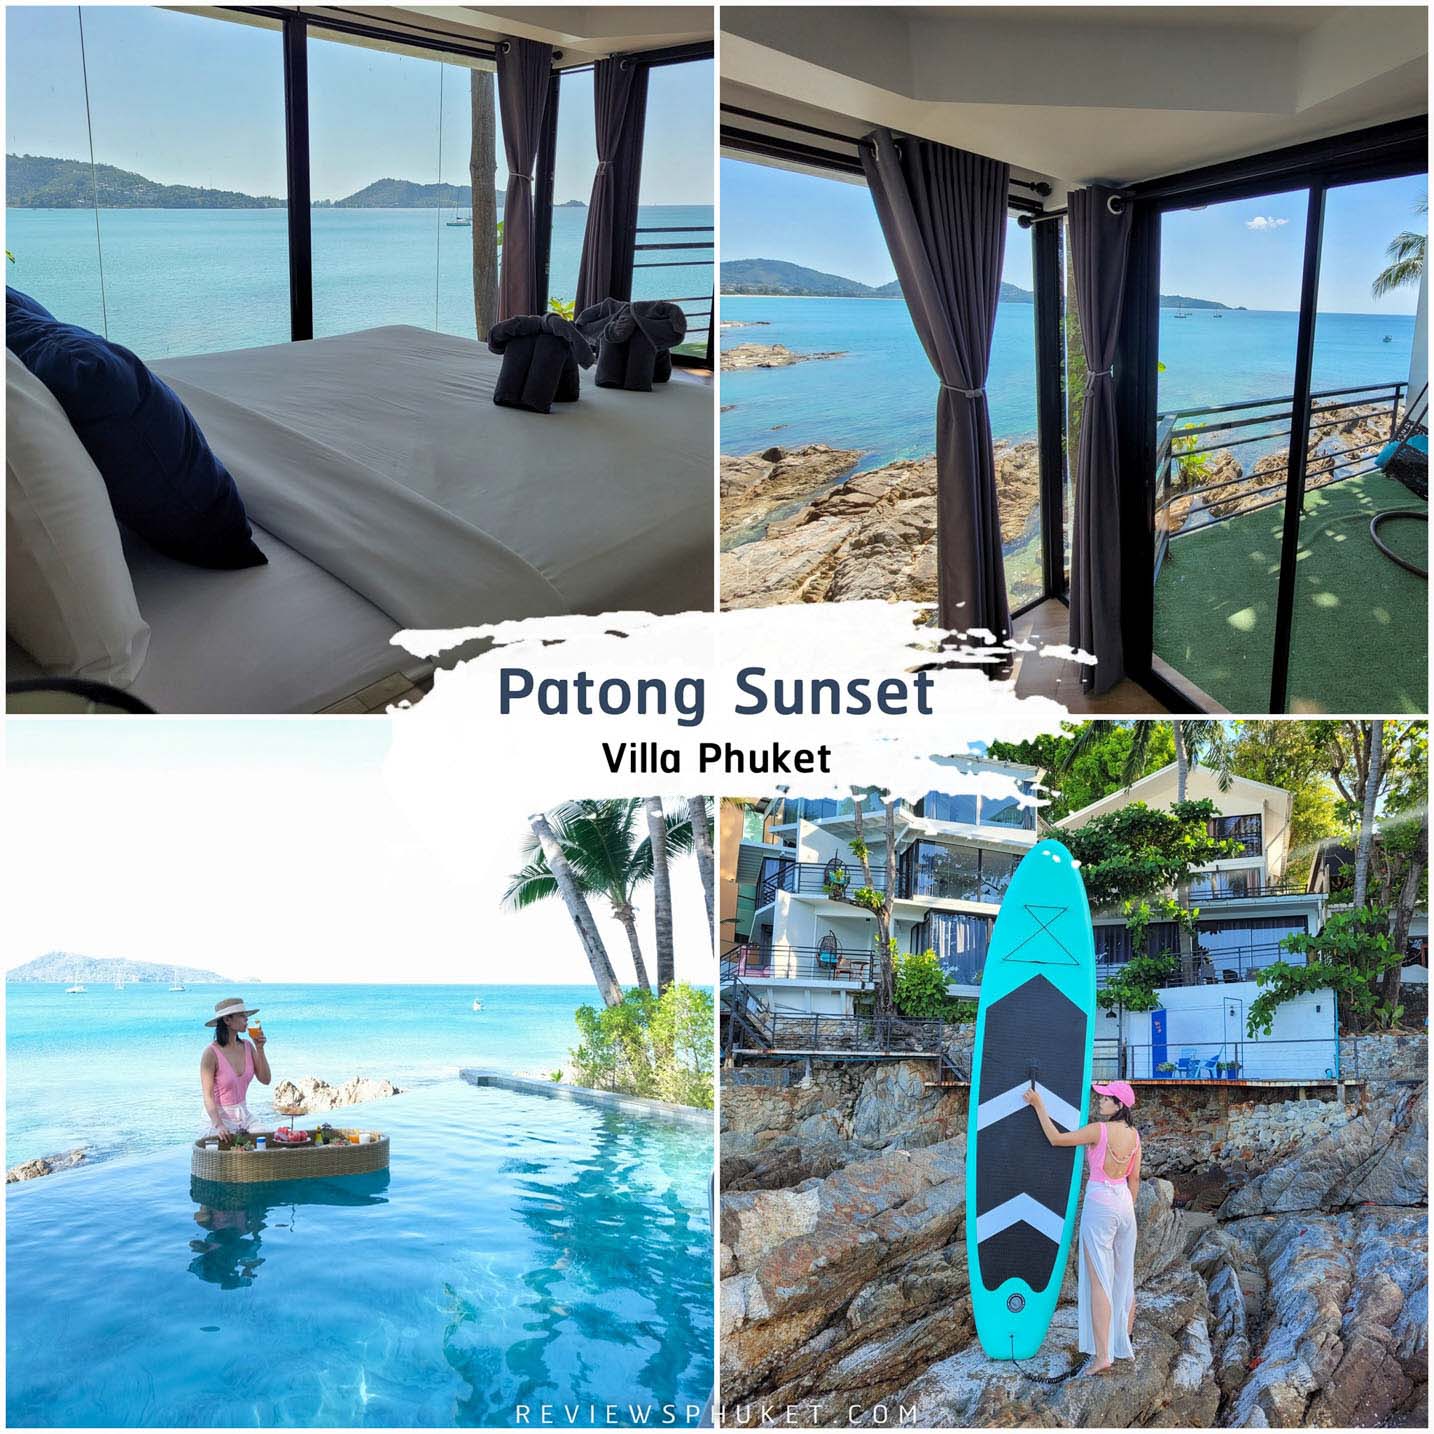 Patong Sunset Villa Phuket ที่พักสุดสวยวิลล่าริมหาดภูเก็ต ดินเนอร์ชมพระอาทิตย์ตกฟินๆ